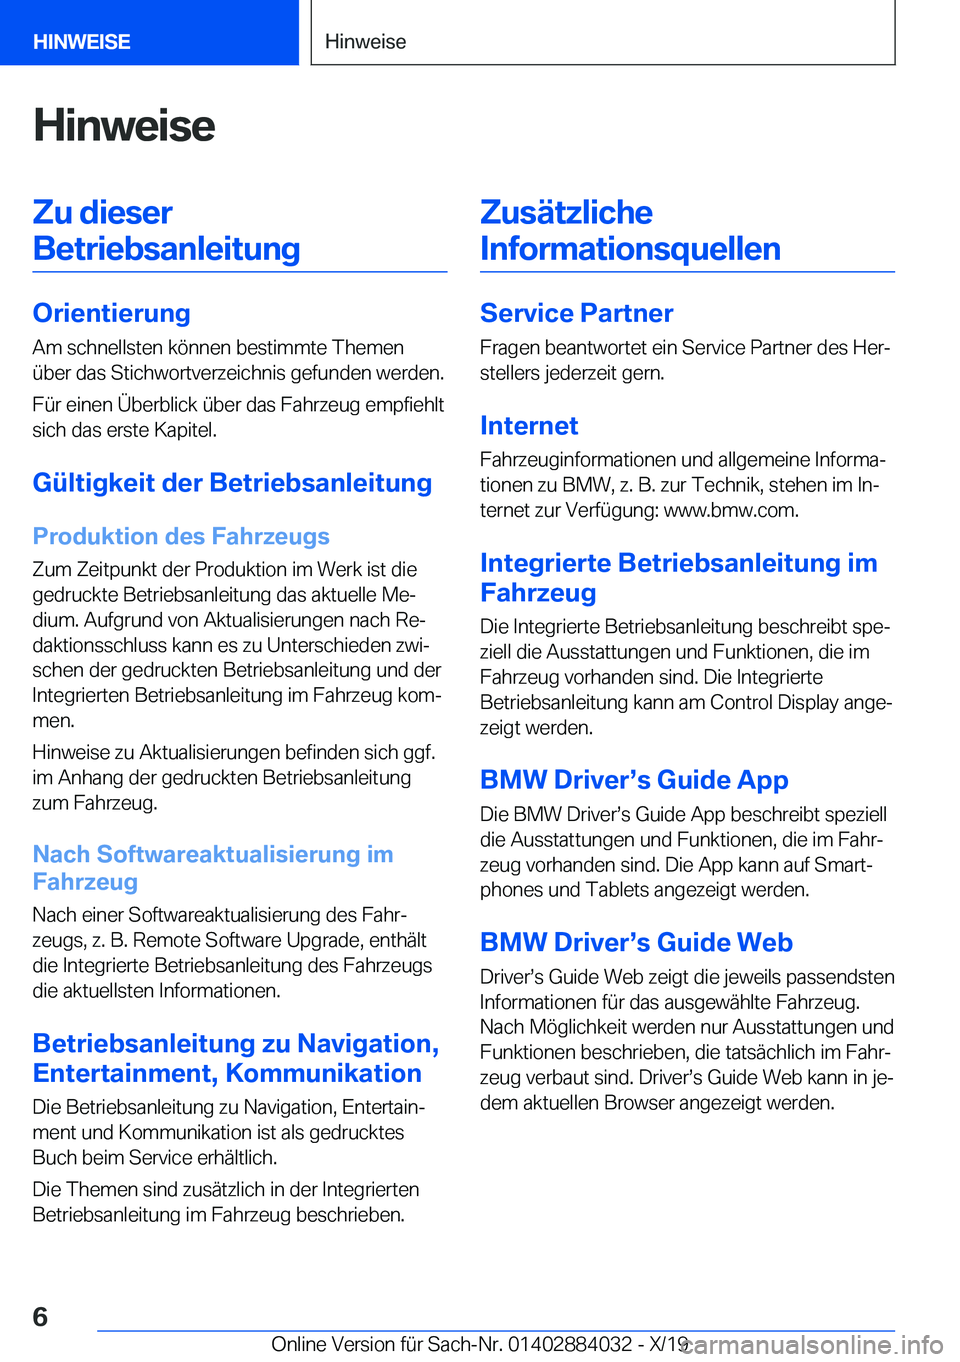 BMW 7 SERIES 2020  Betriebsanleitungen (in German) �H�i�n�w�e�i�s�e�Z�u��d�i�e�s�e�r�B�e�t�r�i�e�b�s�a�n�l�e�i�t�u�n�g
�O�r�i�e�n�t�i�e�r�u�n�g �A�m��s�c�h�n�e�l�l�s�t�e�n��k�